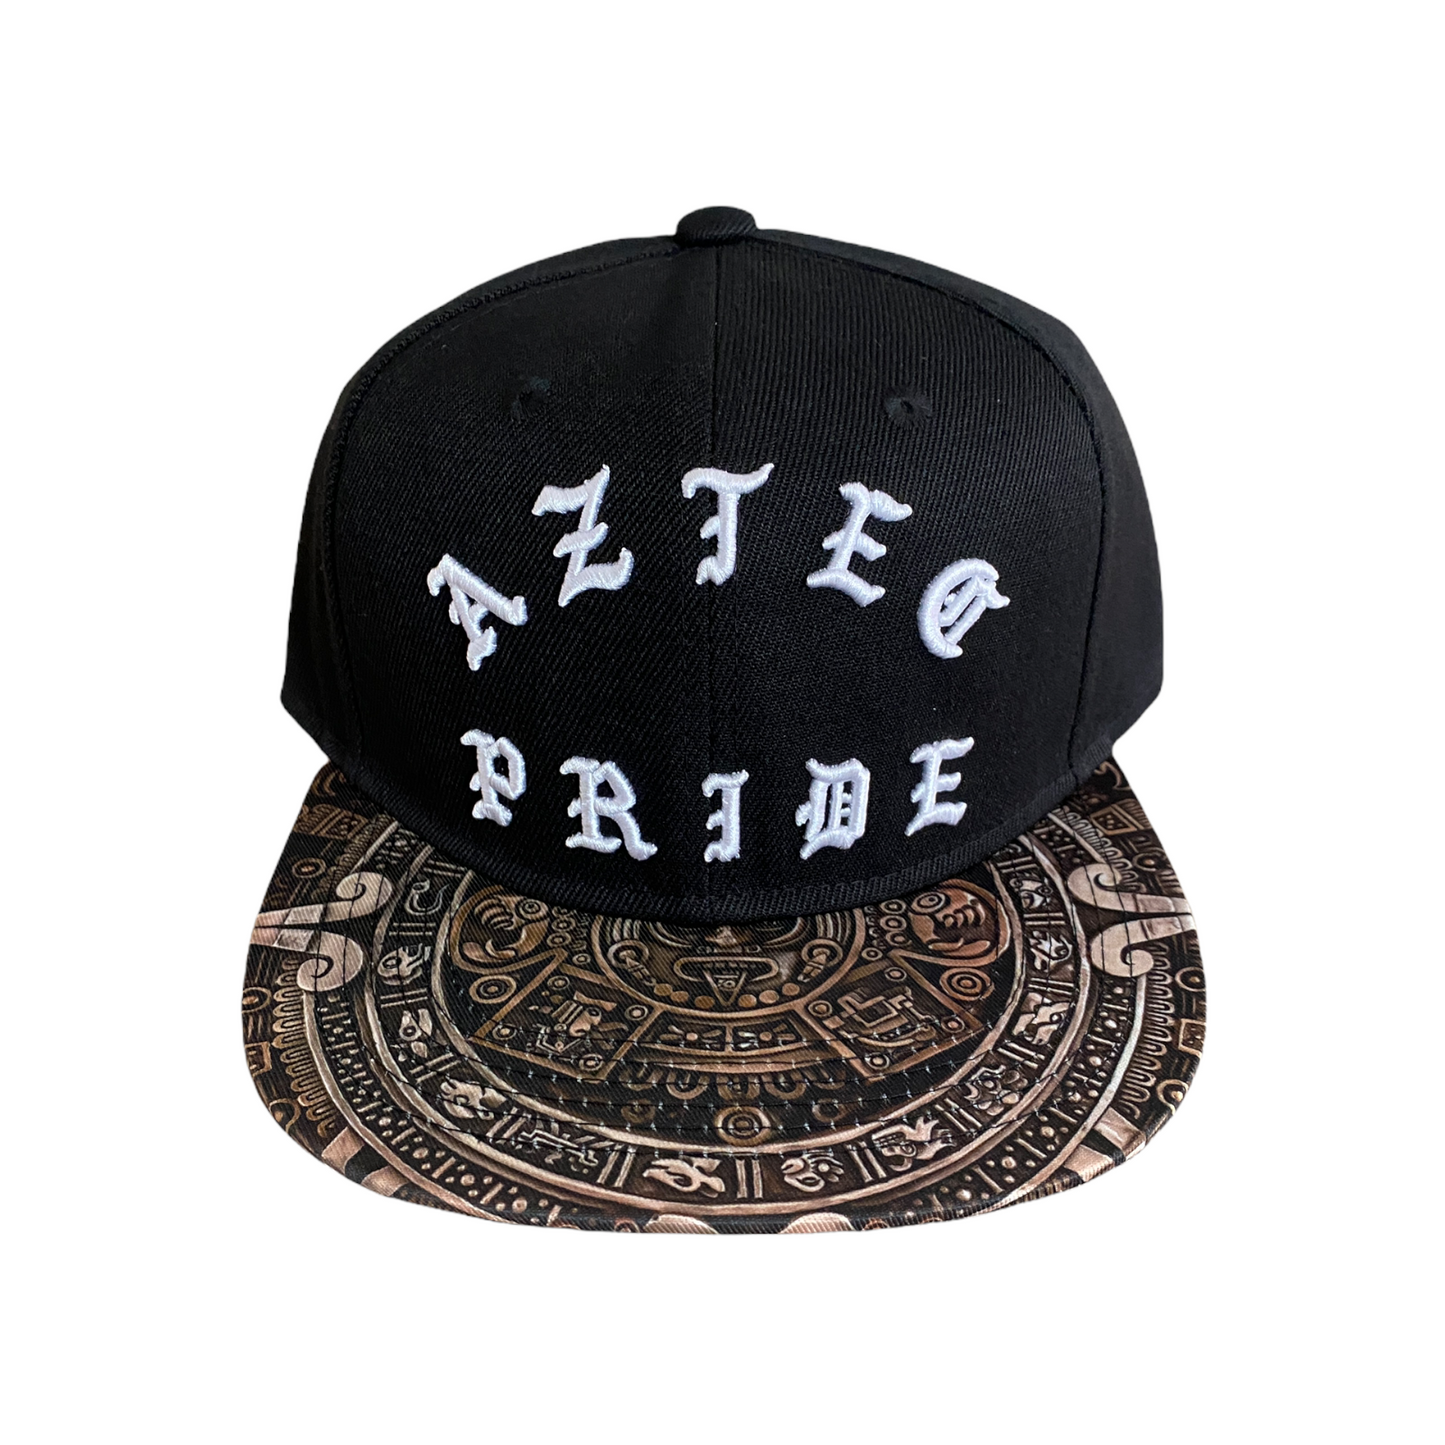 Aztec Pride SnapBack Hat *LIMITED EDITION*